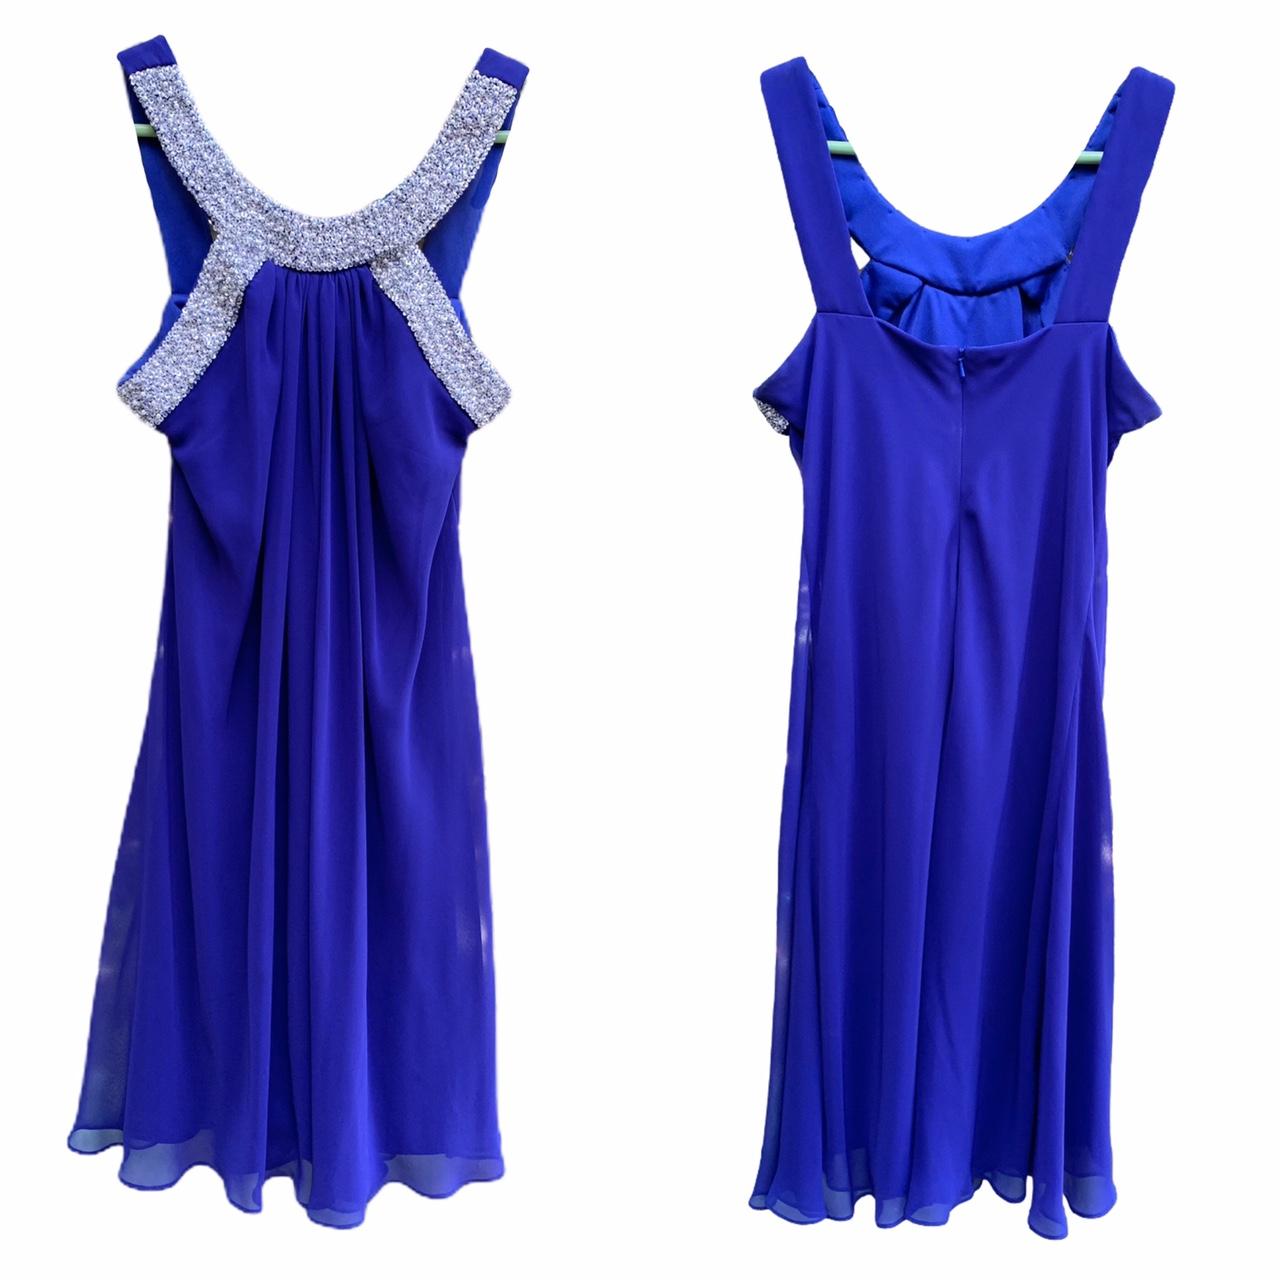 Product Image 1 - Stunning cobalt/royal blue cocktail/prom dress